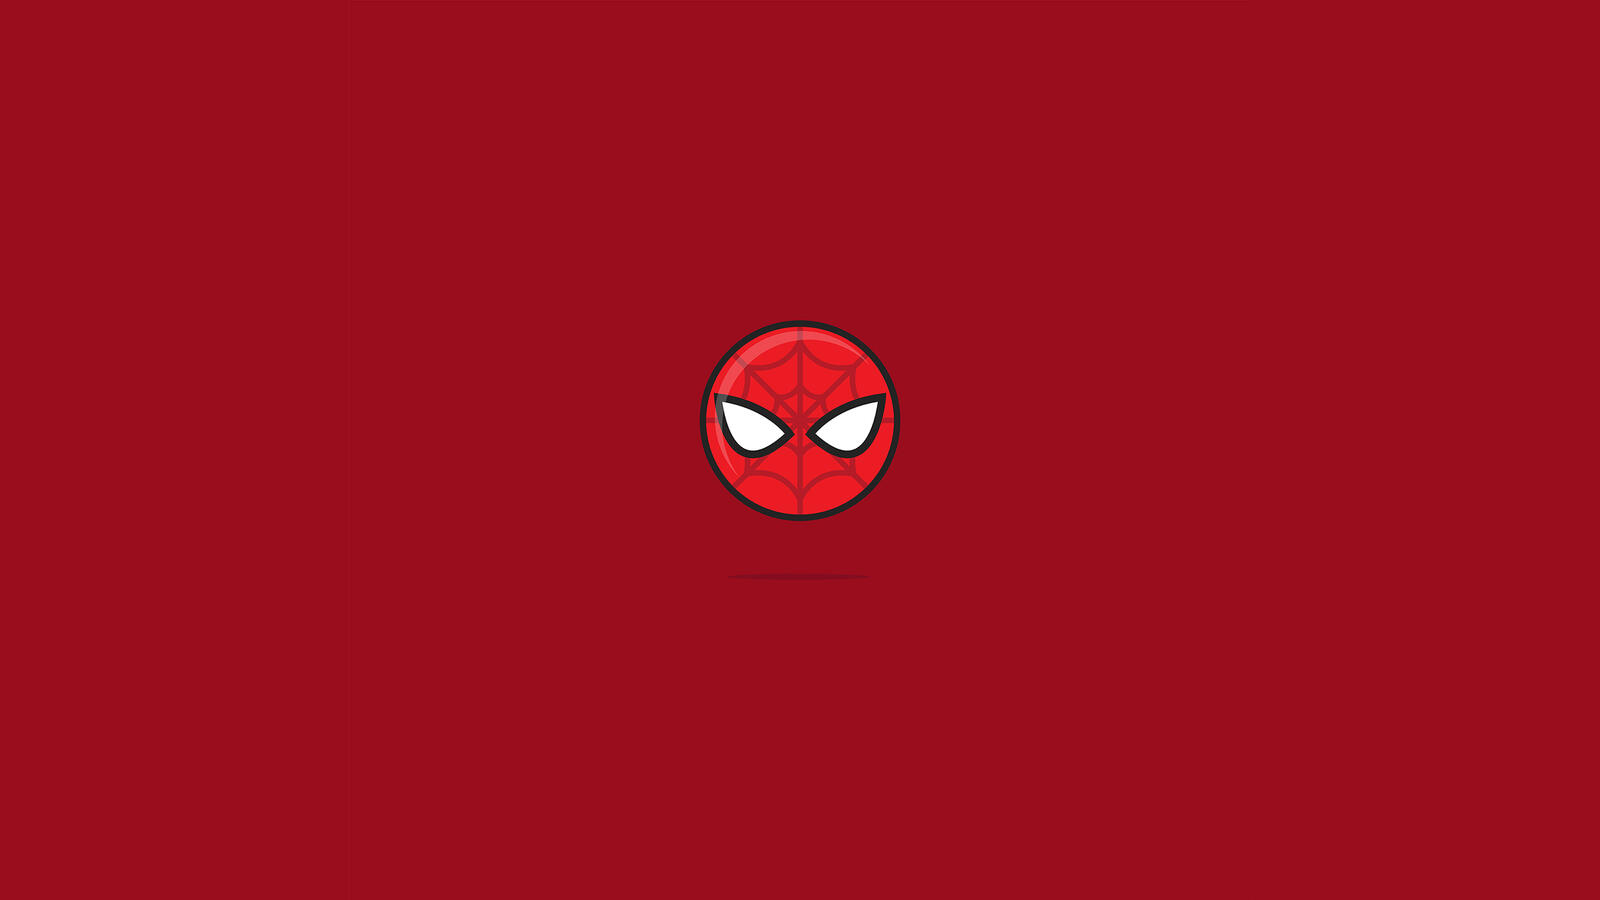 Wallpapers Spiderman illustration superheroes on the desktop